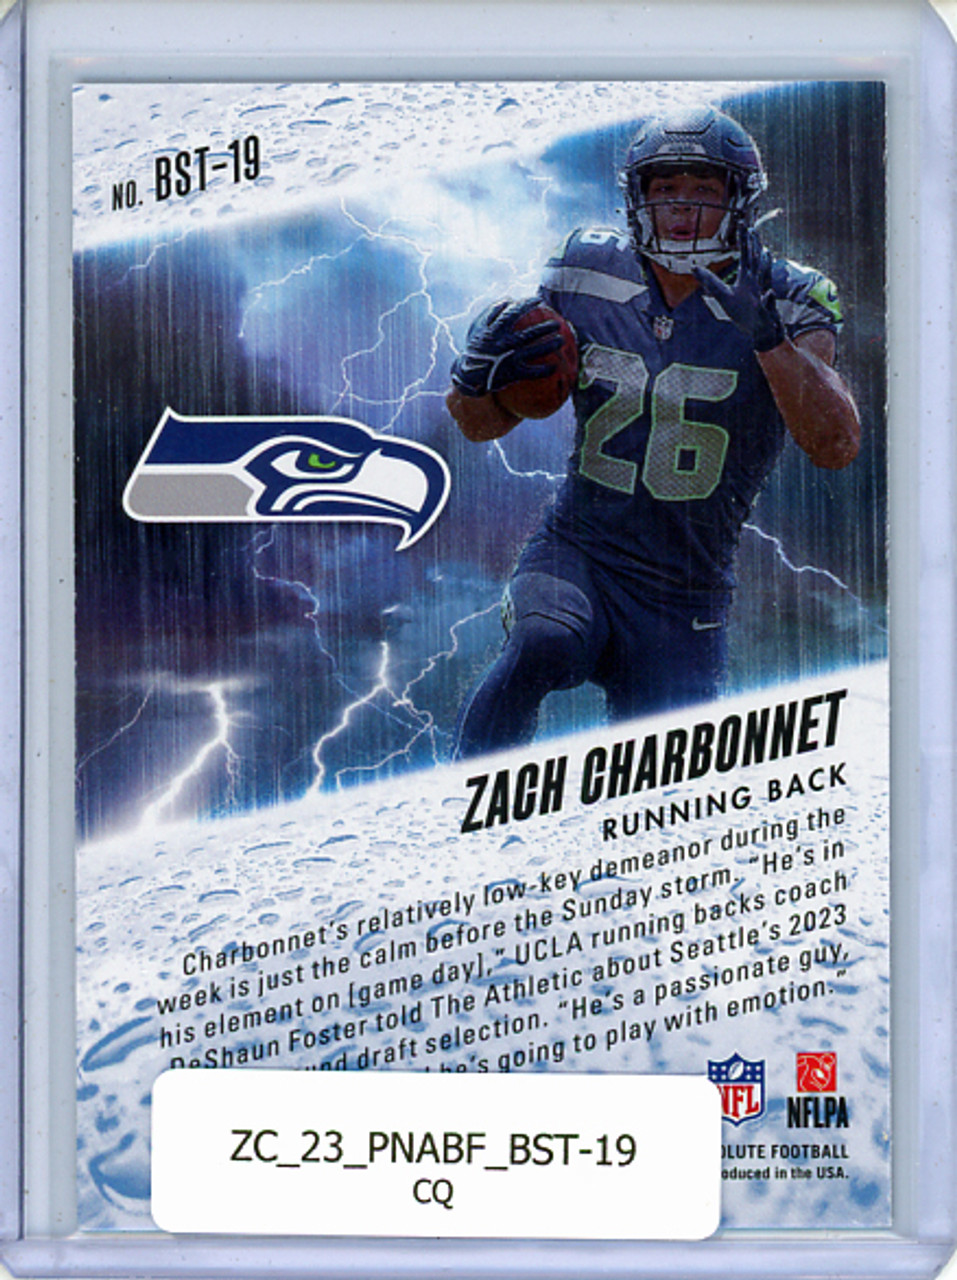 Zach Charbonnet 2023 Absolute, By Storm #BST-19 (CQ)